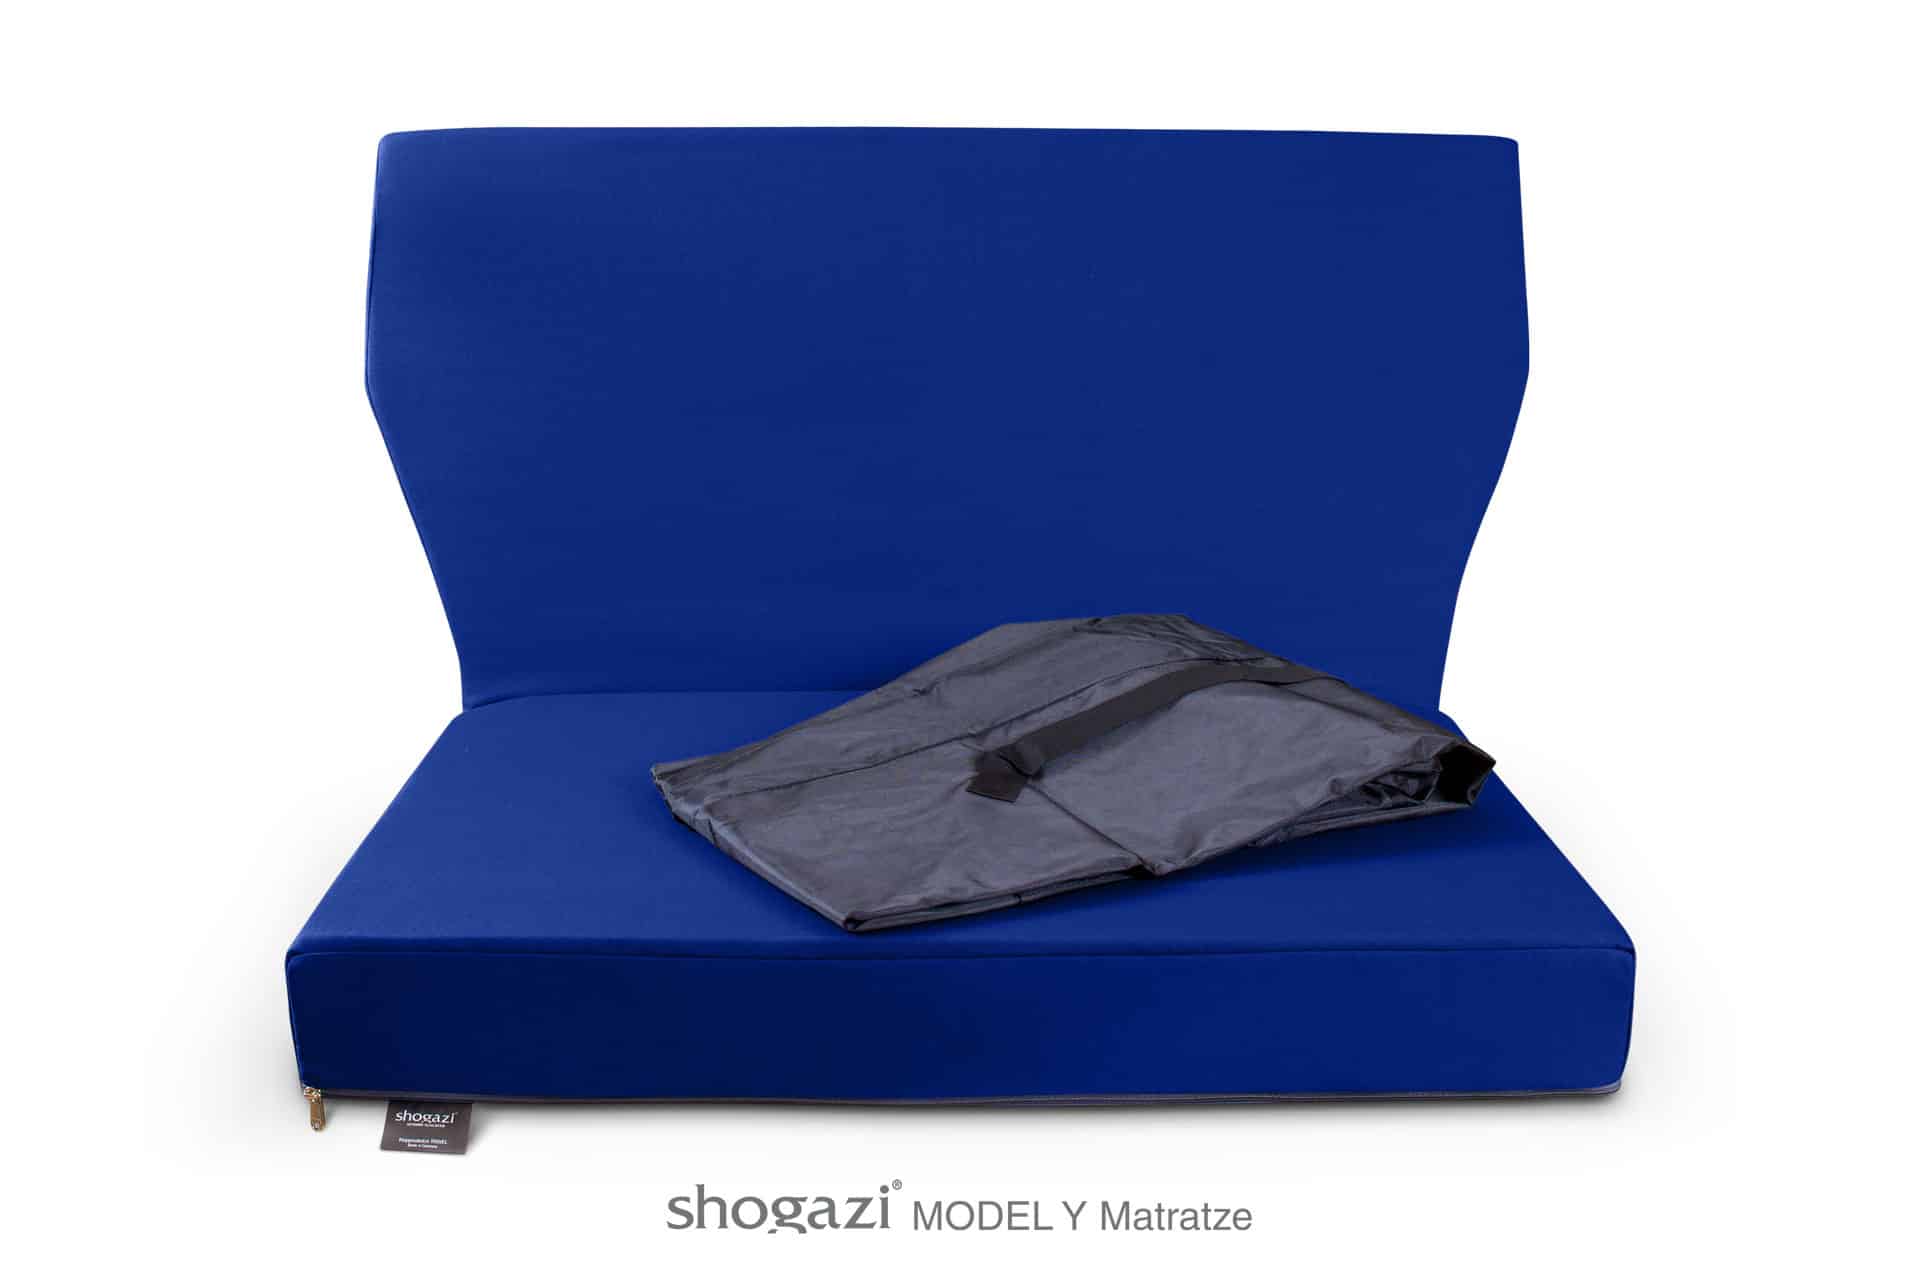 Model Y Matratze blau | shogazi Travel